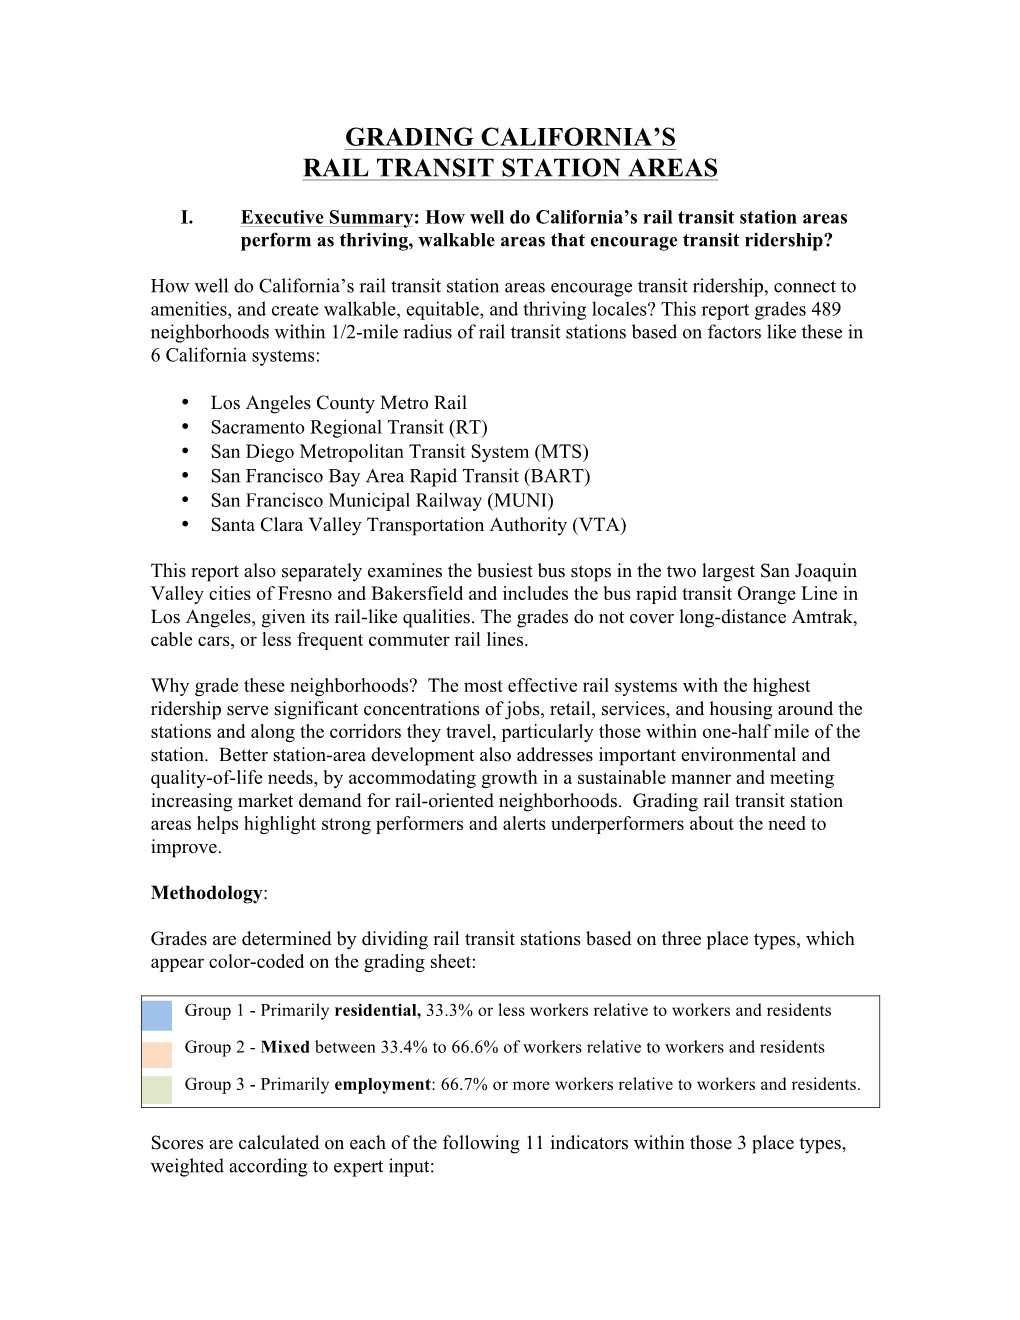 Grading California's Rail Transit Station Areas